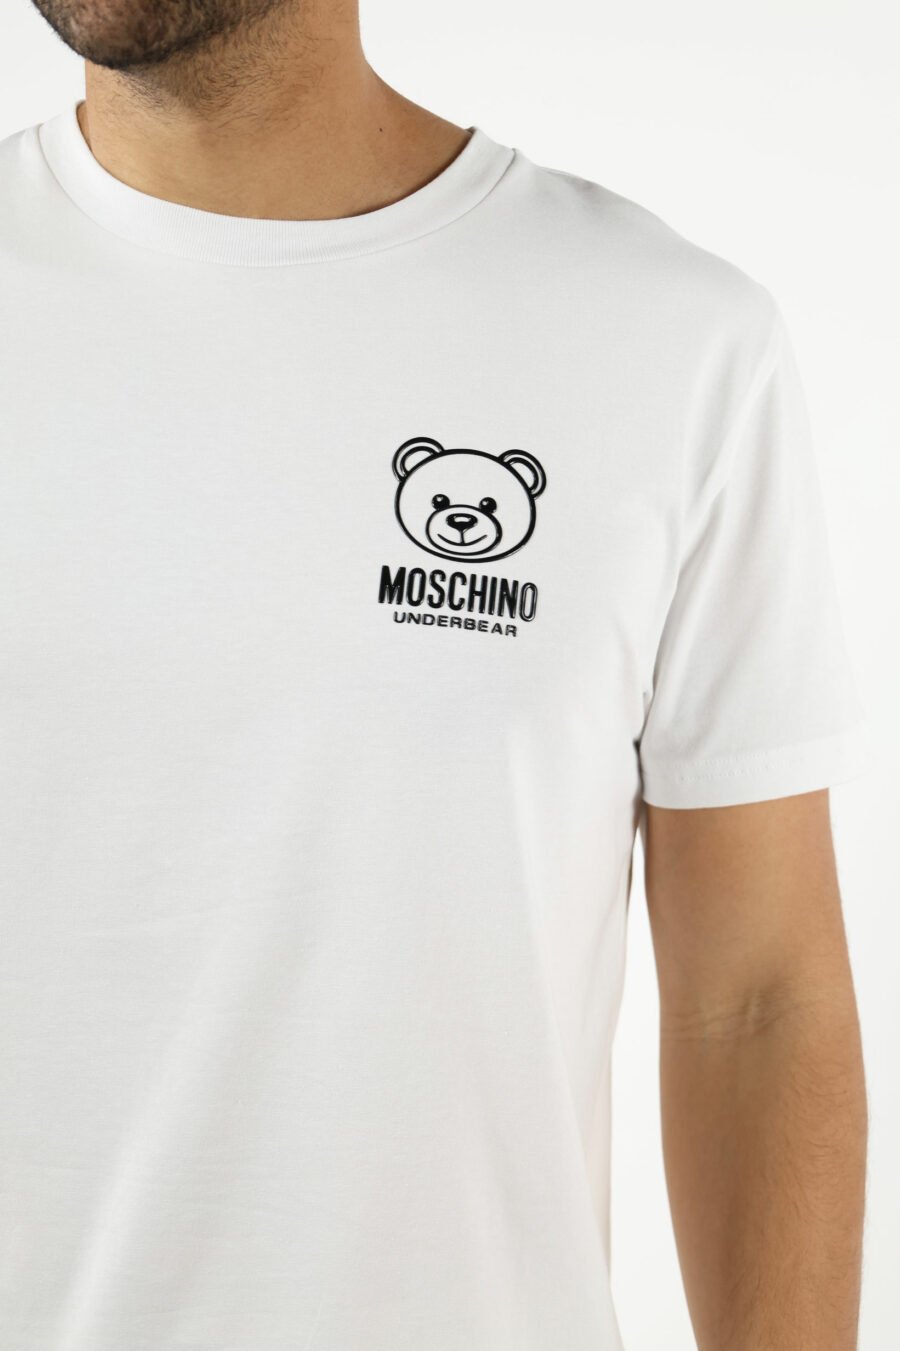 T-Shirt weiß mit Mini-Logo-Bär "Underbear" in schwarzem Gummi - 111031